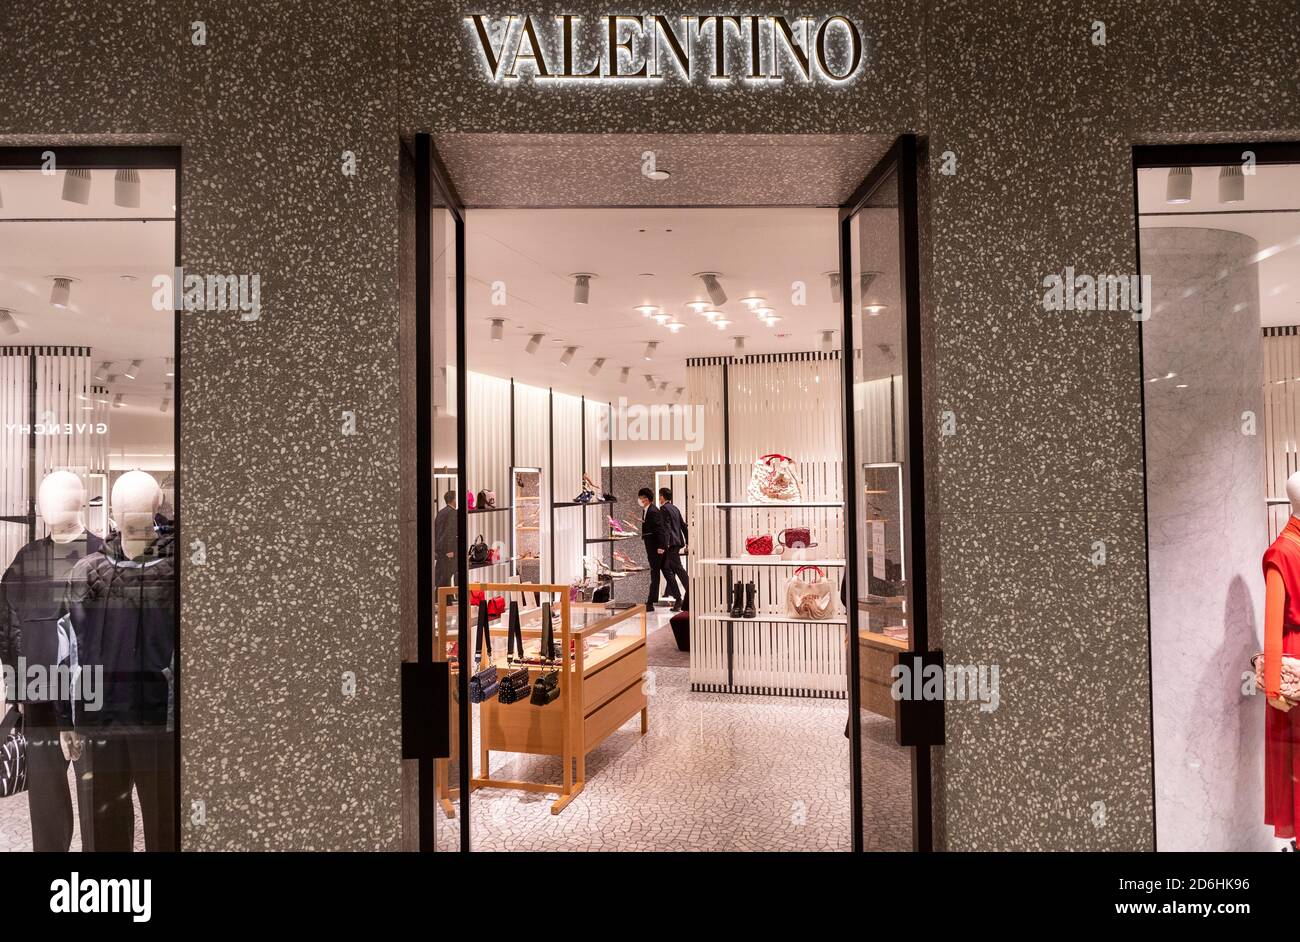 Italian clothing company Valentino store seen in Hong Kong Stock Photo -  Alamy